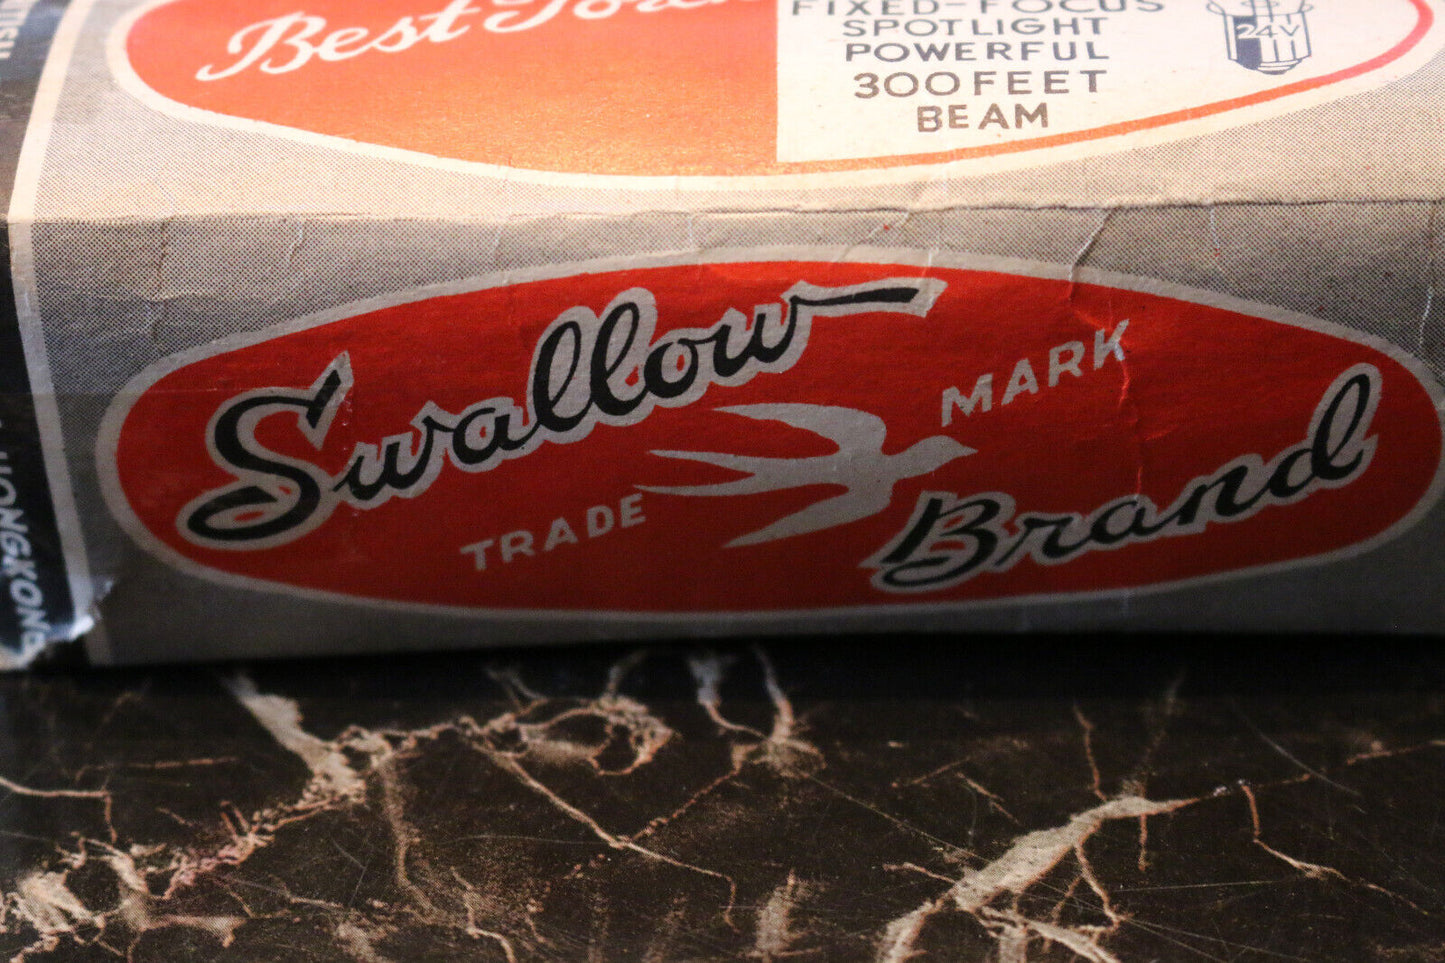 Swallow Trade Mark Brand Flashlight 300 Feet Beam In Box Fixed-Focus Spotlight